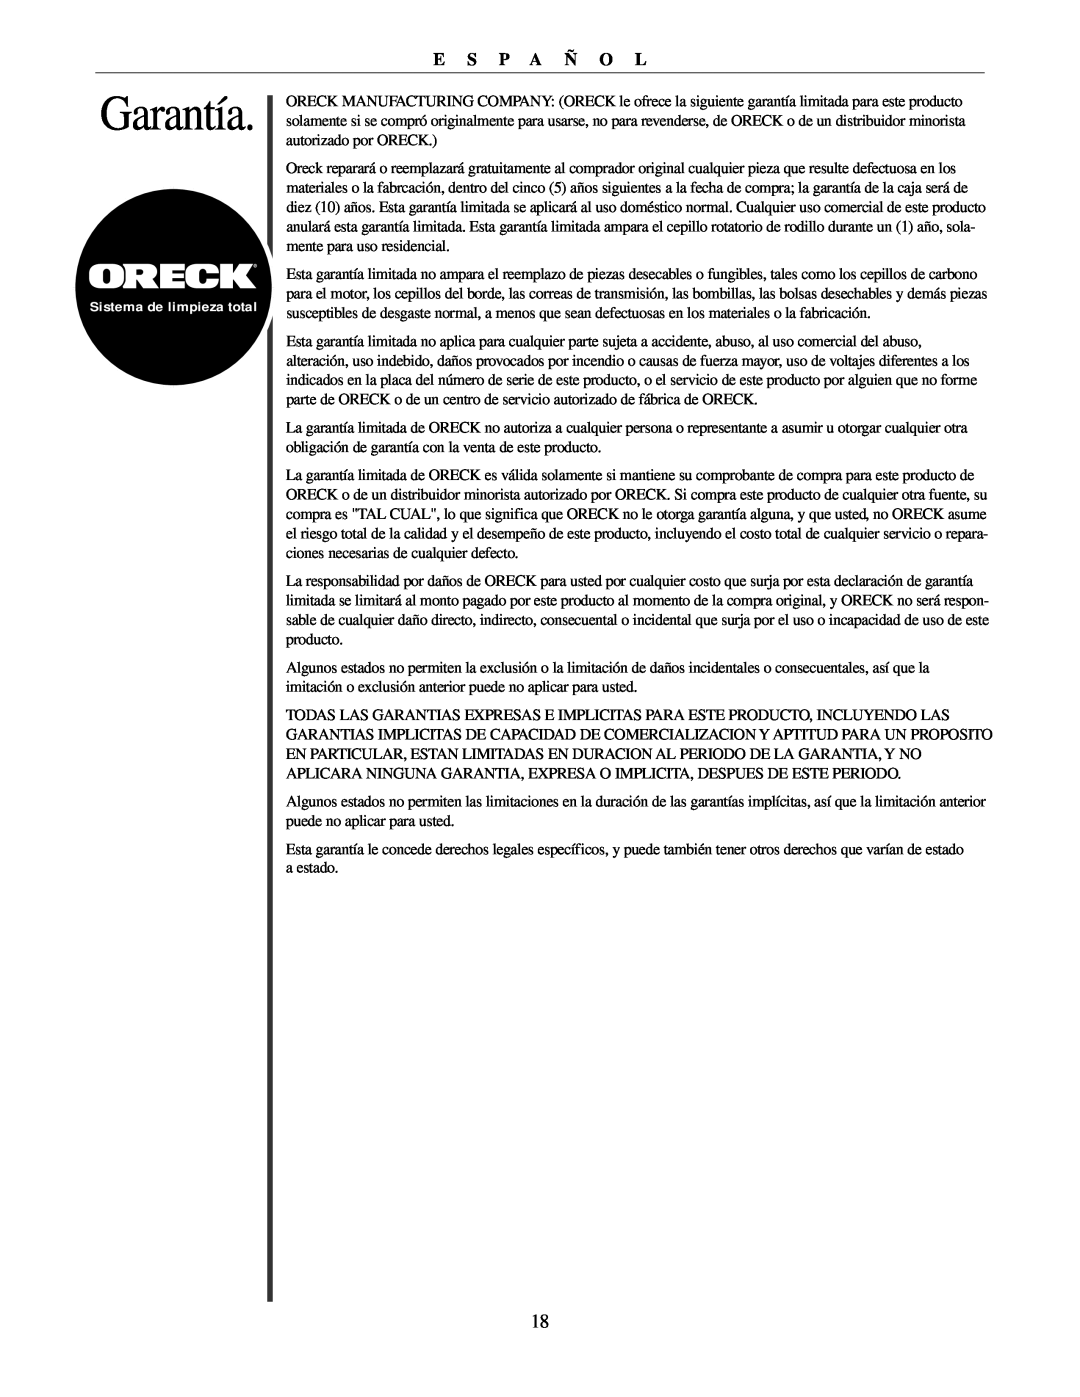 Oreck U4151 manual Garantía, E S P A Ñ O L 